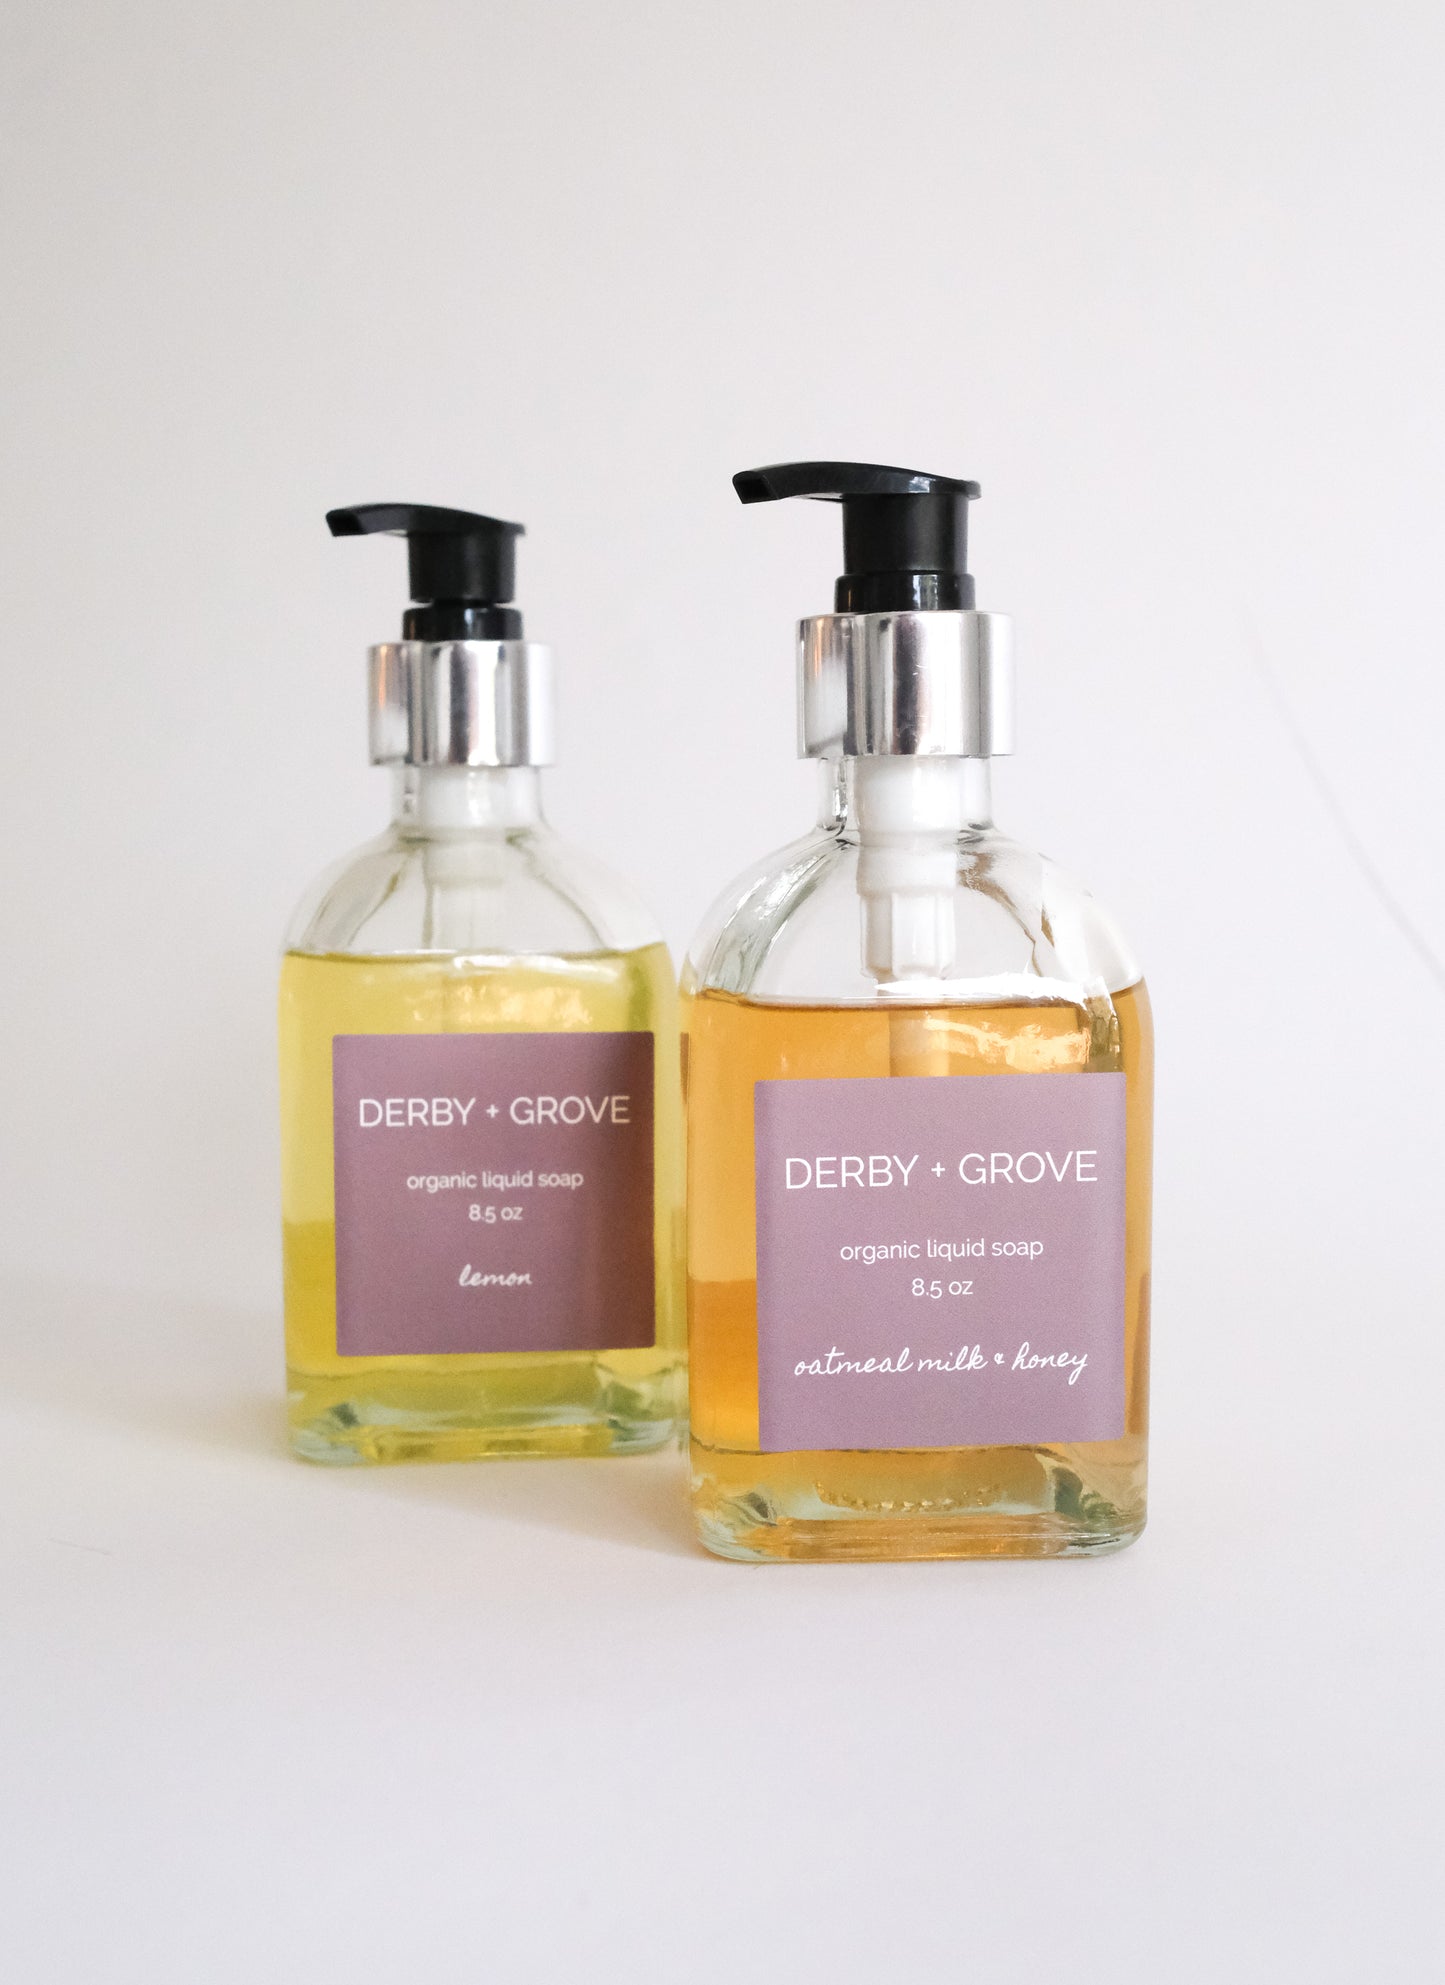 DERBY + GROVE Handmade Natural Liquid Soap 8.5oz Pump Bottle